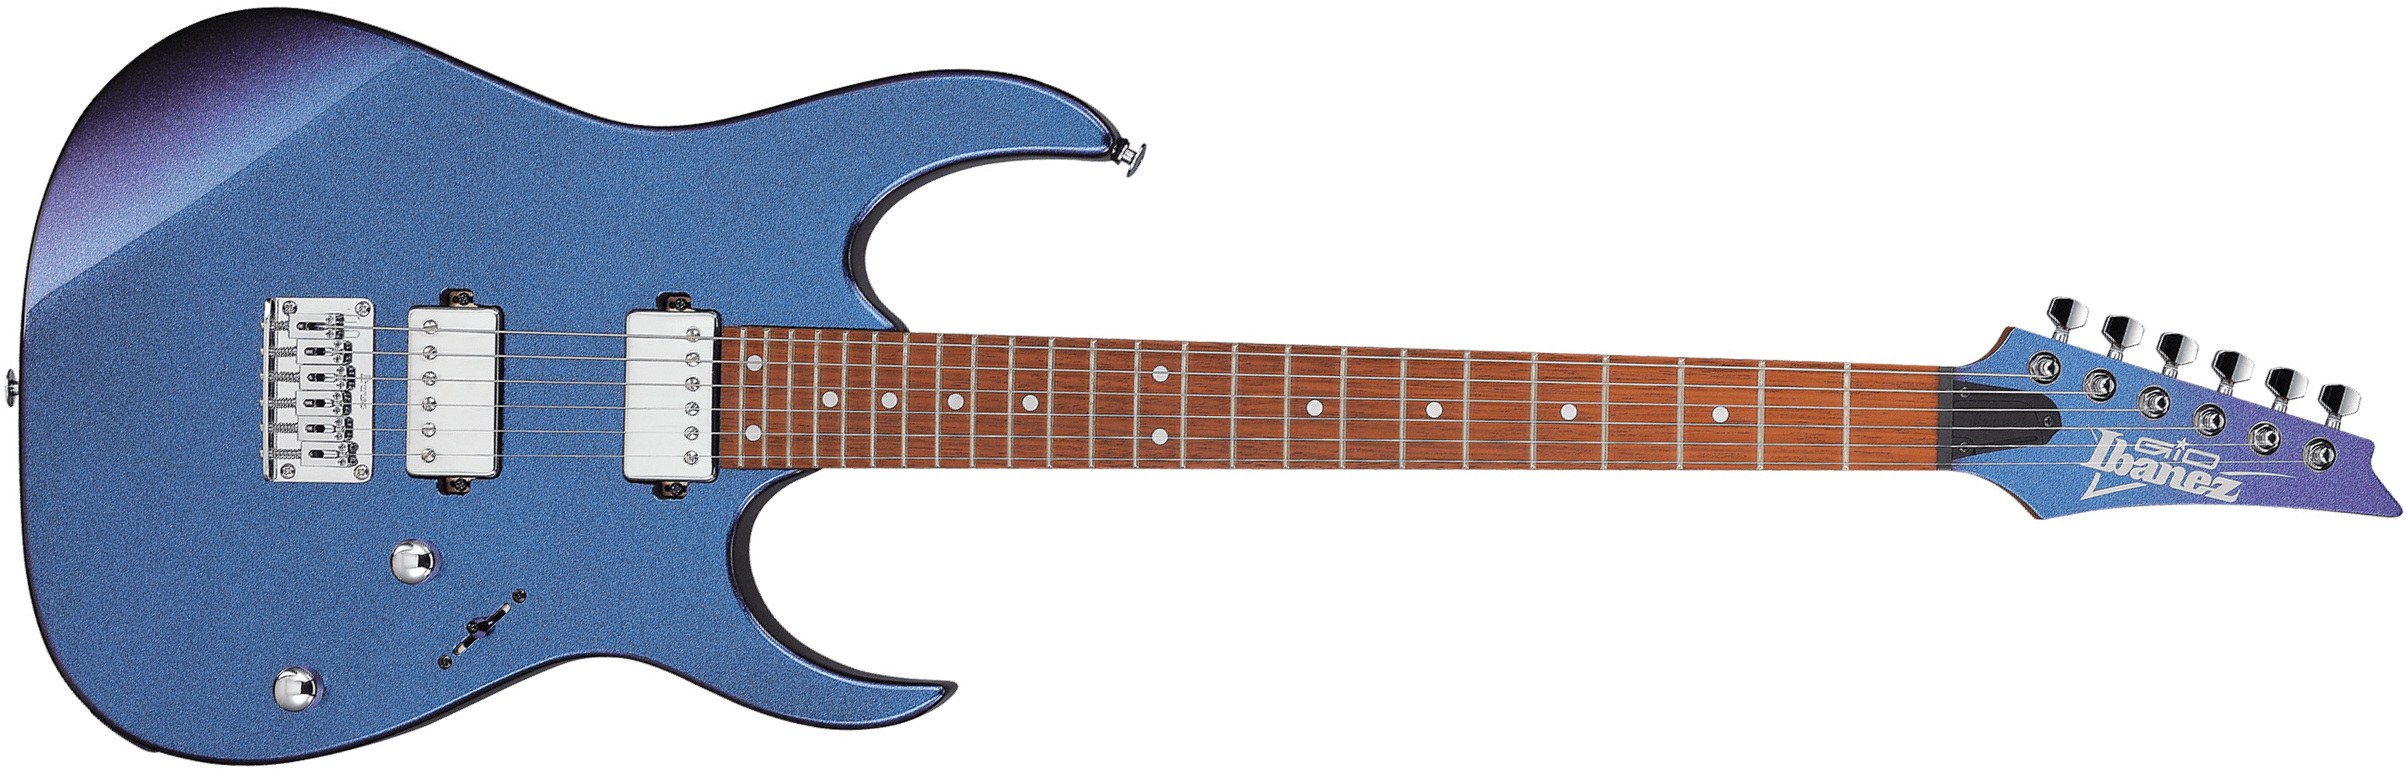 Ibanez Grg121sp Bmc Ltd Gio Hh Ht Jat - Blue Metal Cameleon - Elektrische gitaar in Str-vorm - Main picture